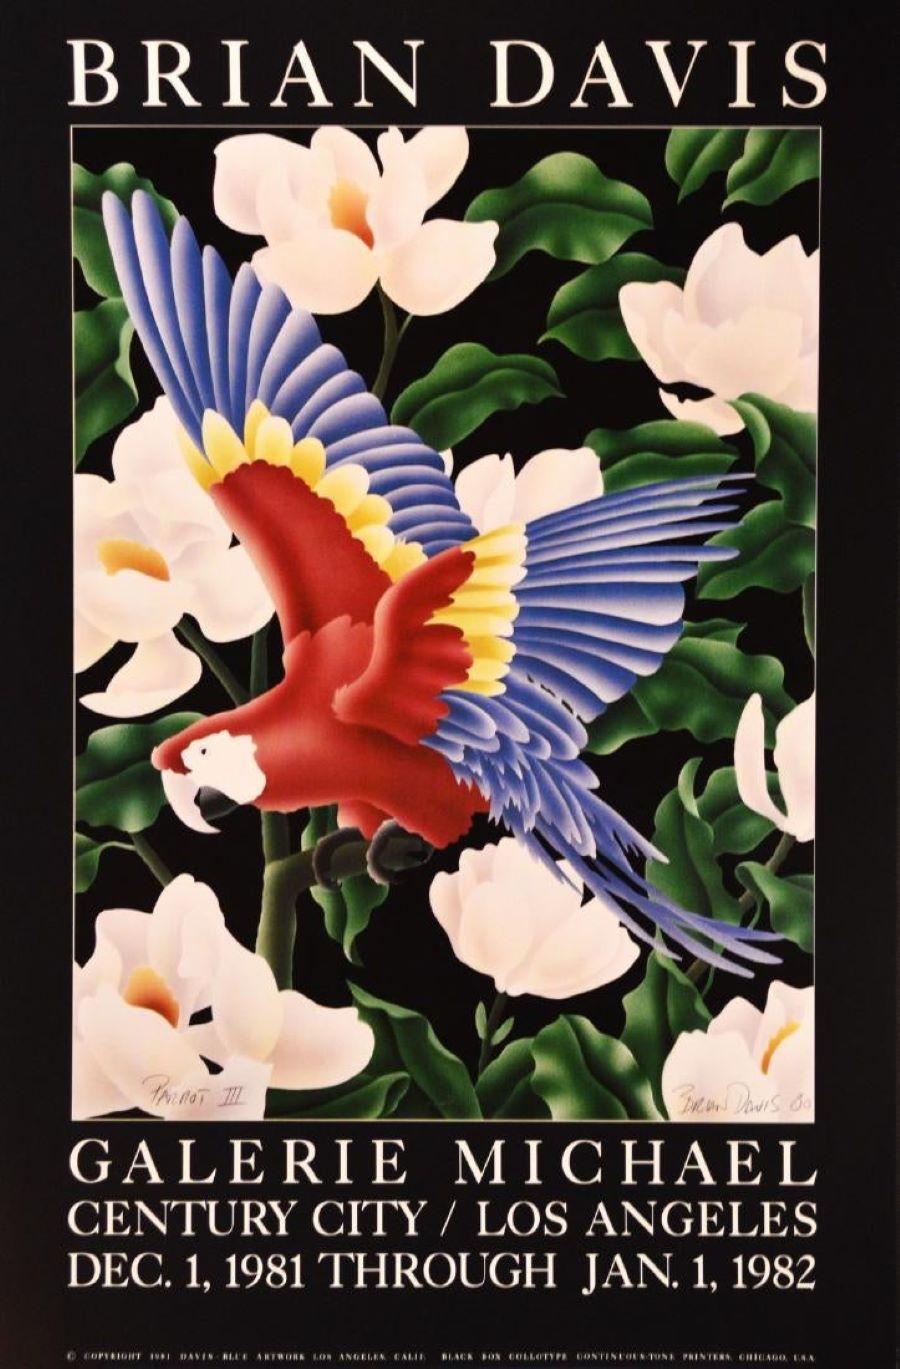 “Parrot III”-Galerie Michael, Century City/Los Angeles